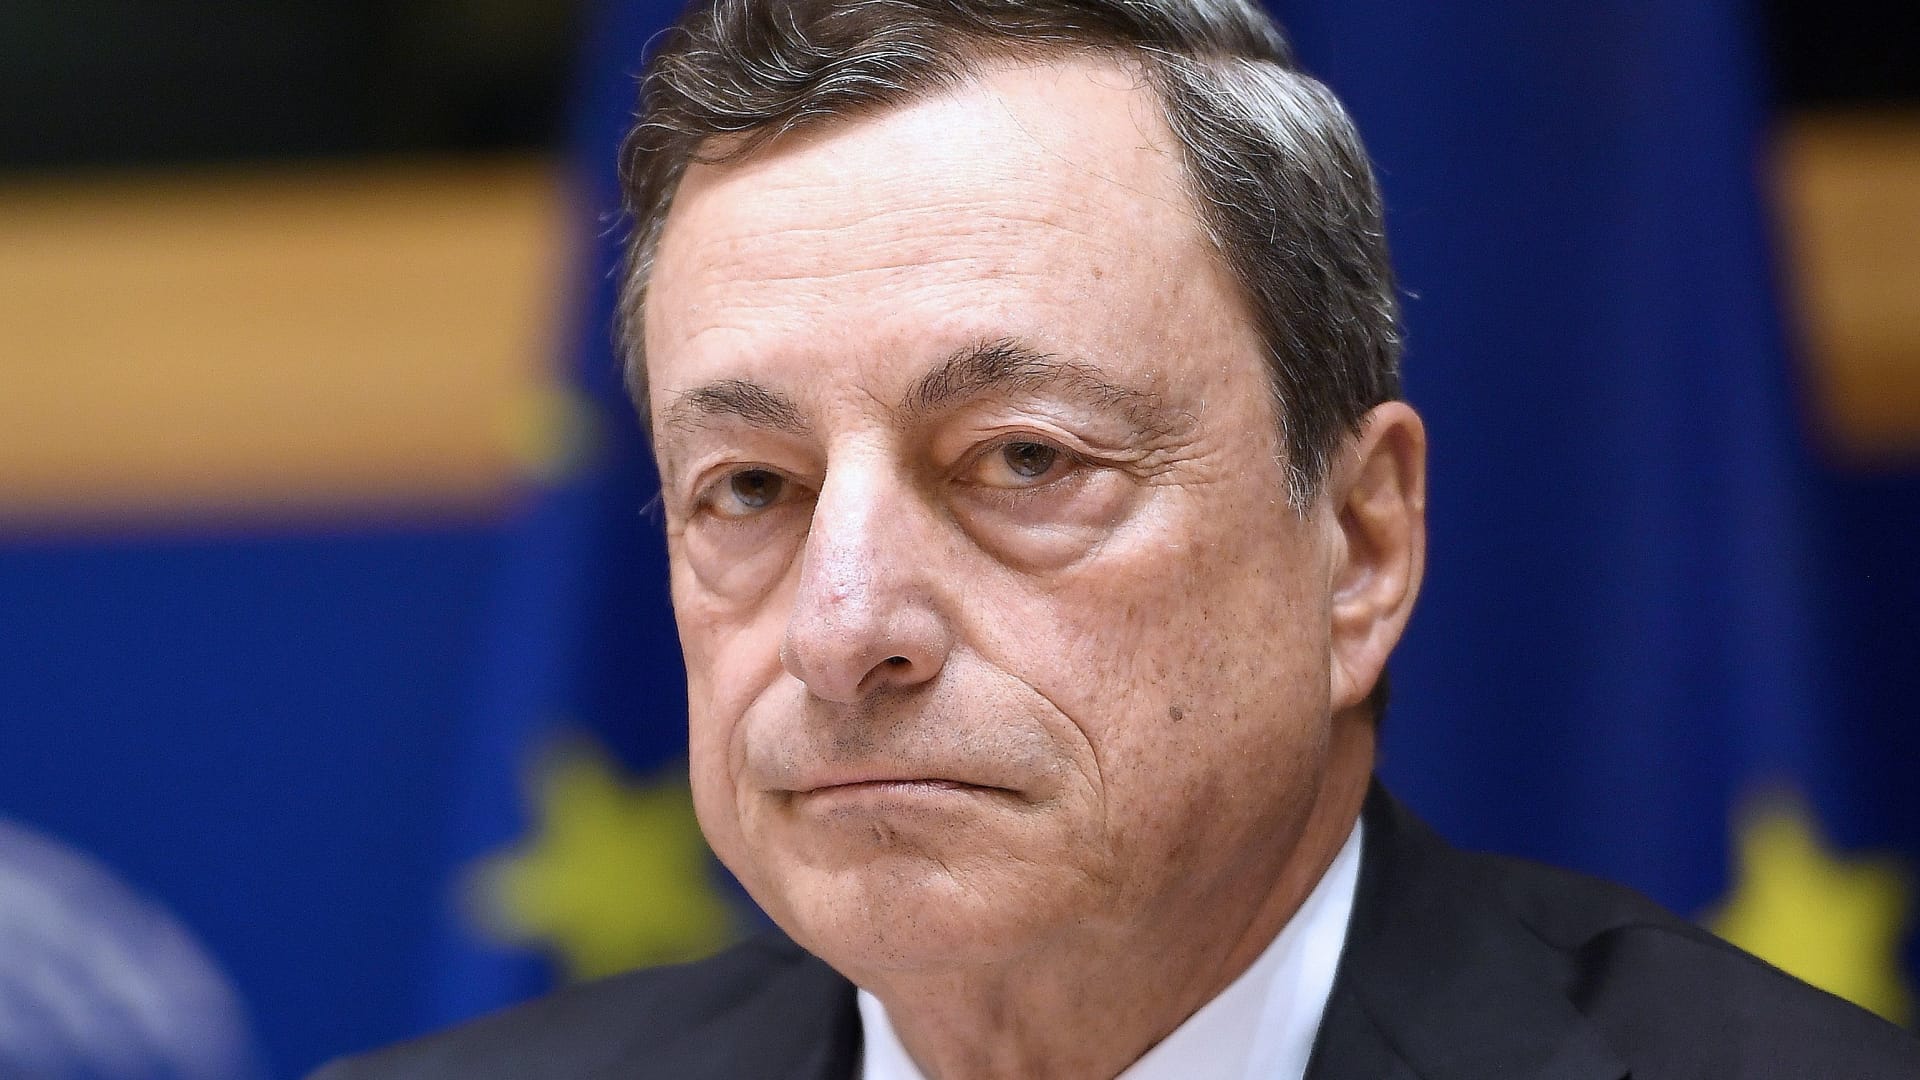 European Central Bank President Mario Draghi speaks in Frankfurt